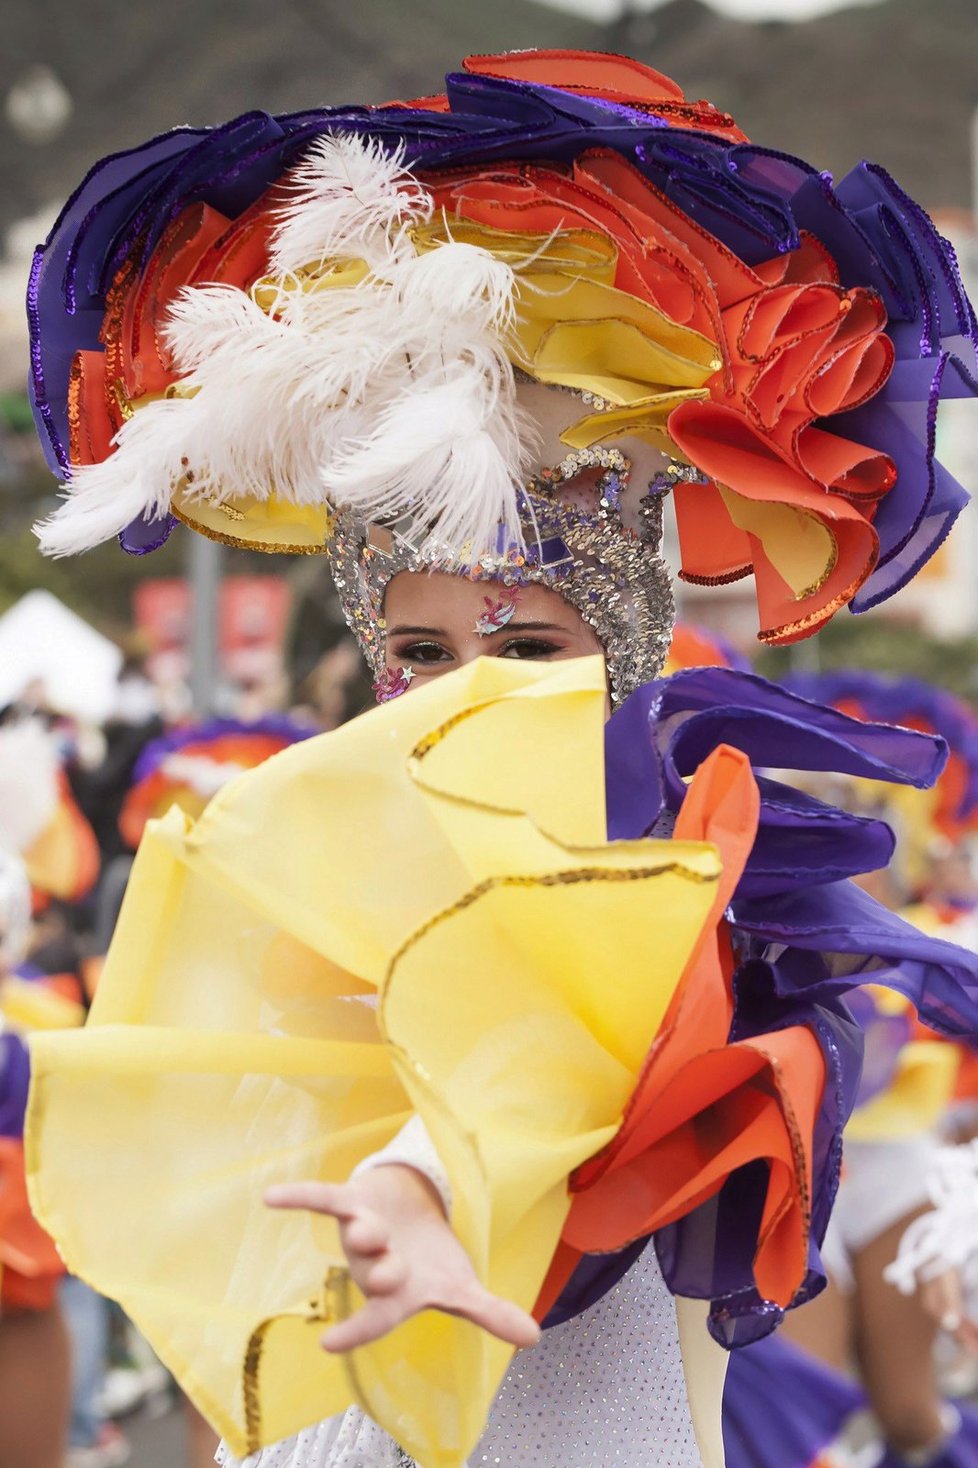 Snímky z letošního karnevalu v Santa Cruz na ostrově Tenerife